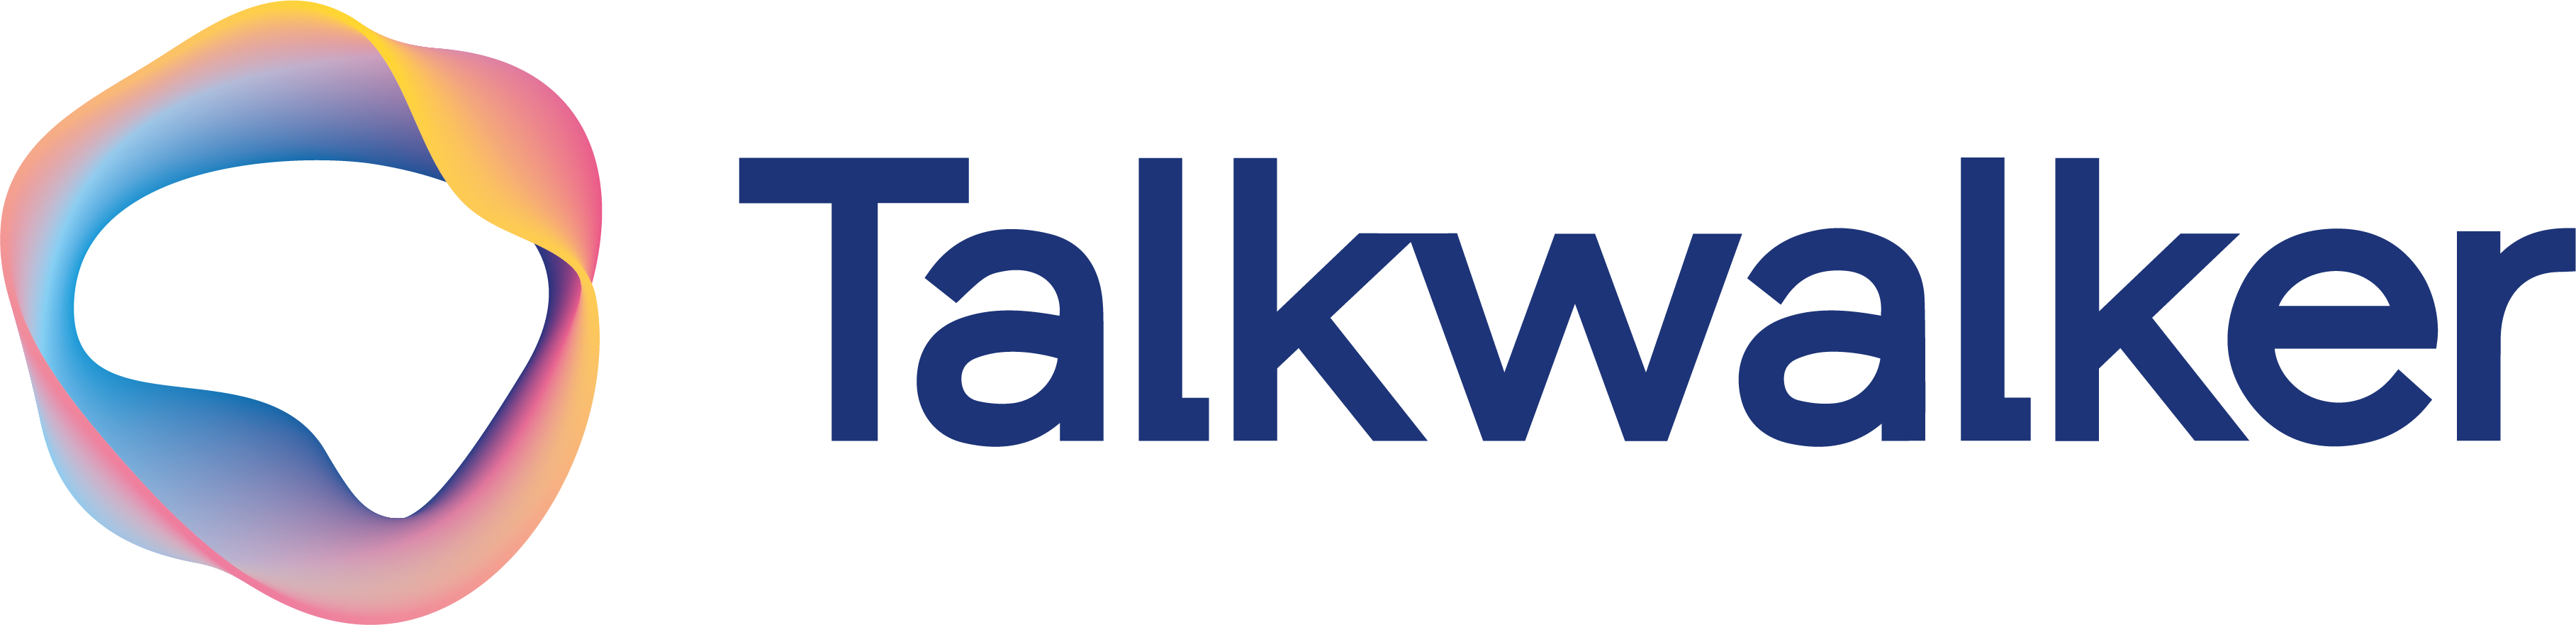 Talkwalker Logo_Full_Blue-1